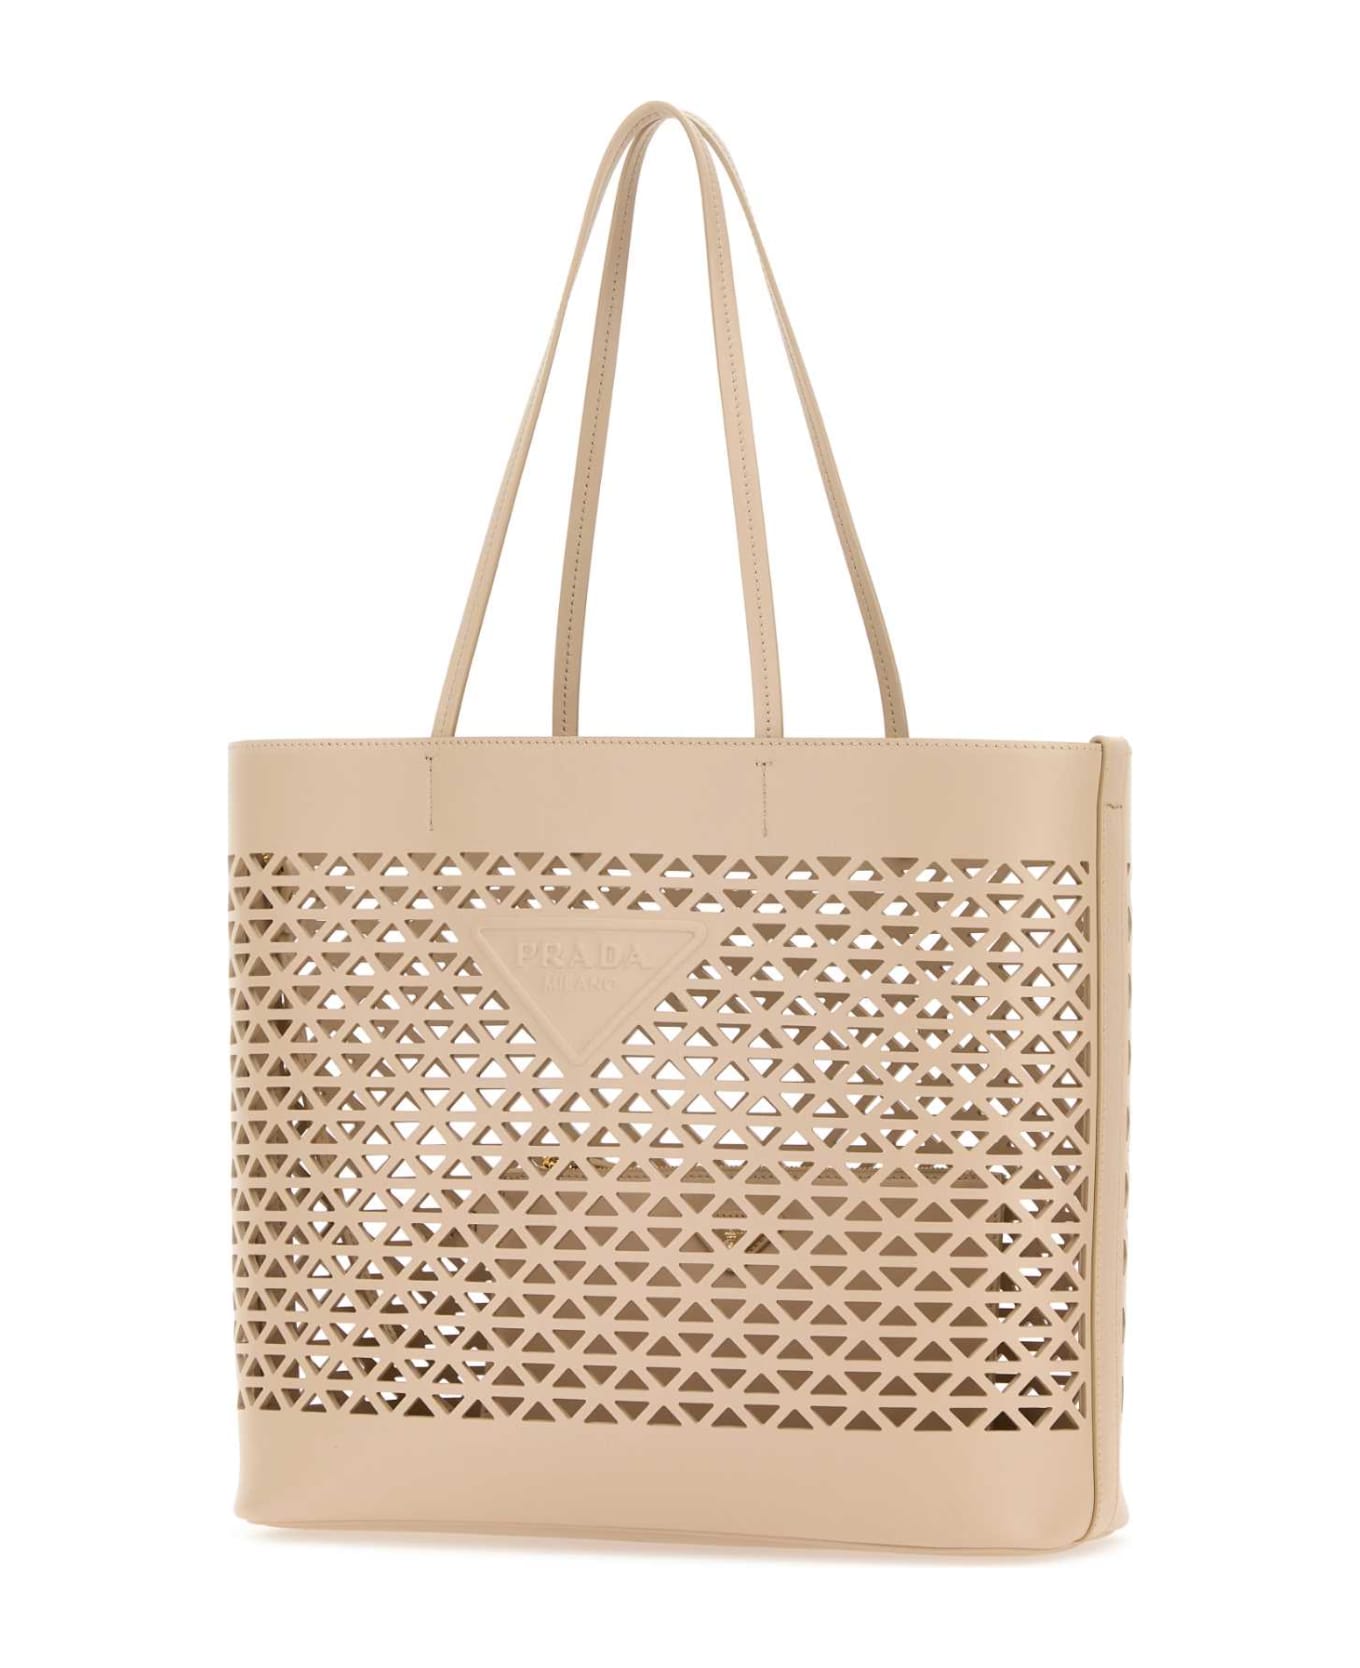 Prada Sand Leather Shopping Bag - TRAVERTINO